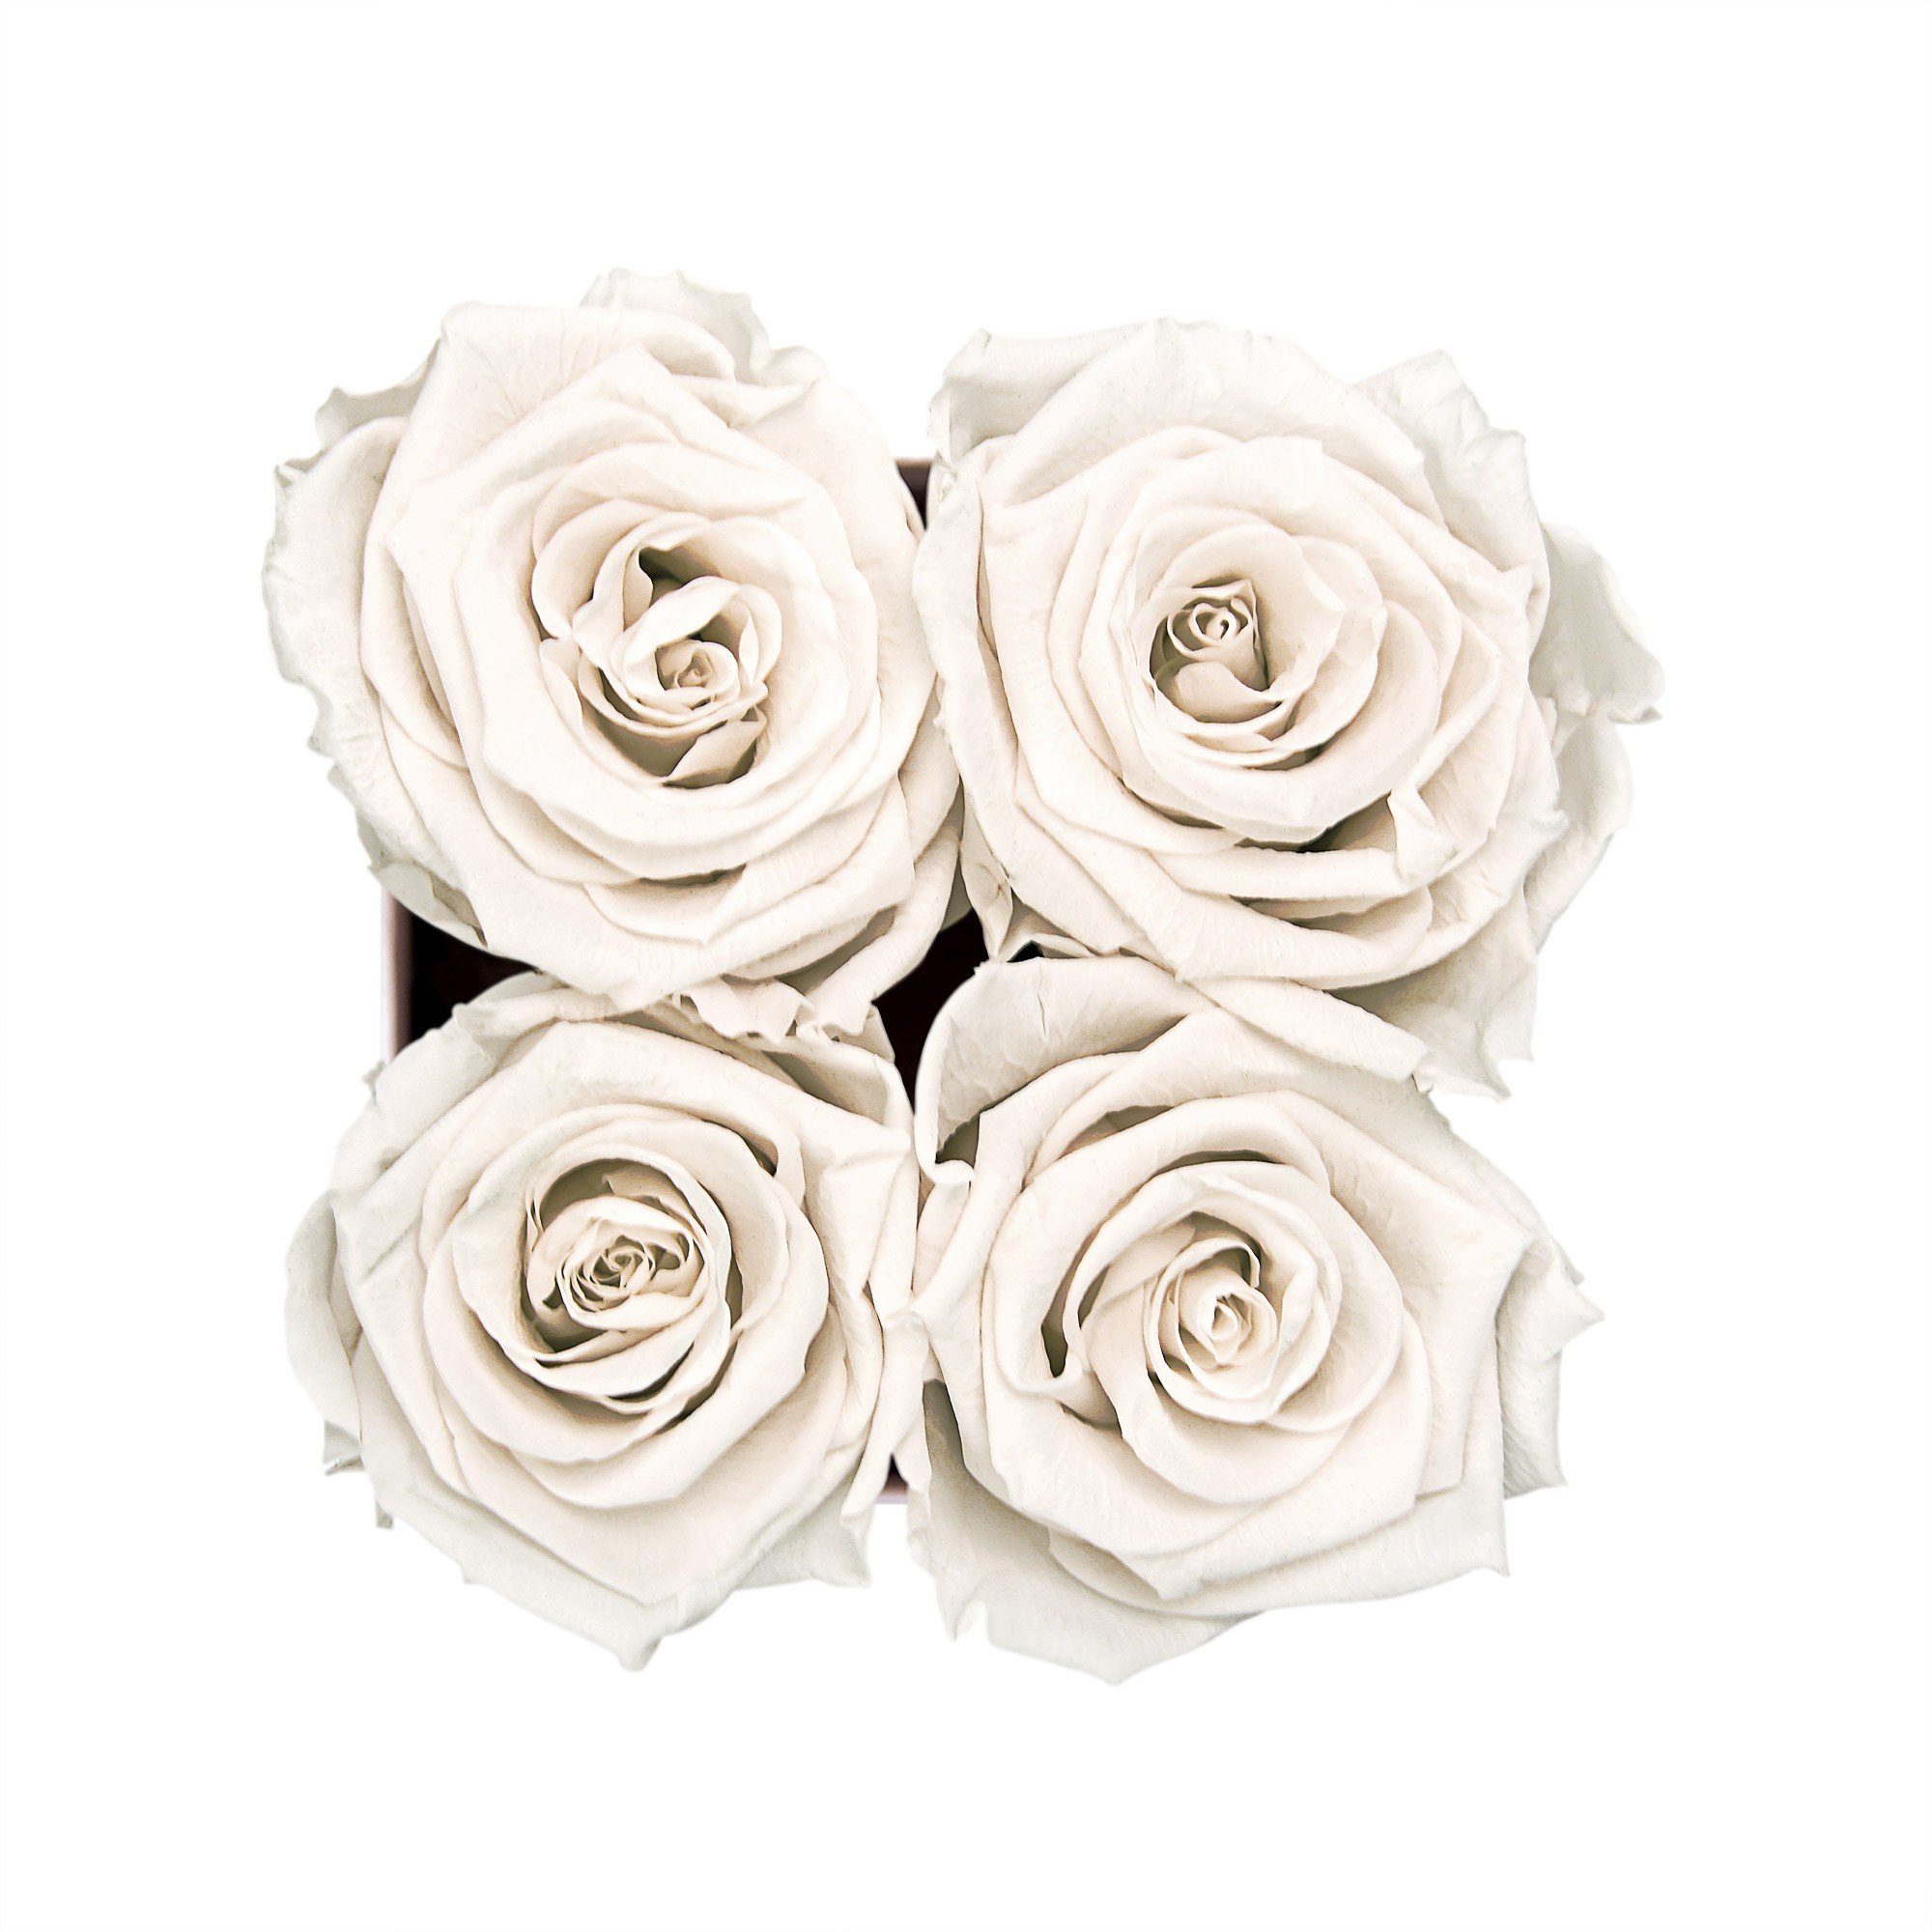 I Infinity weiß Kunstblume Eckige Blumen by I Höhe 3 4 Richter Rosenbox konservierte Echte, duftende Rose, Holy Flowers, cm in Holy Infinity Rosen haltbar Jahre Raul White I 11 mit